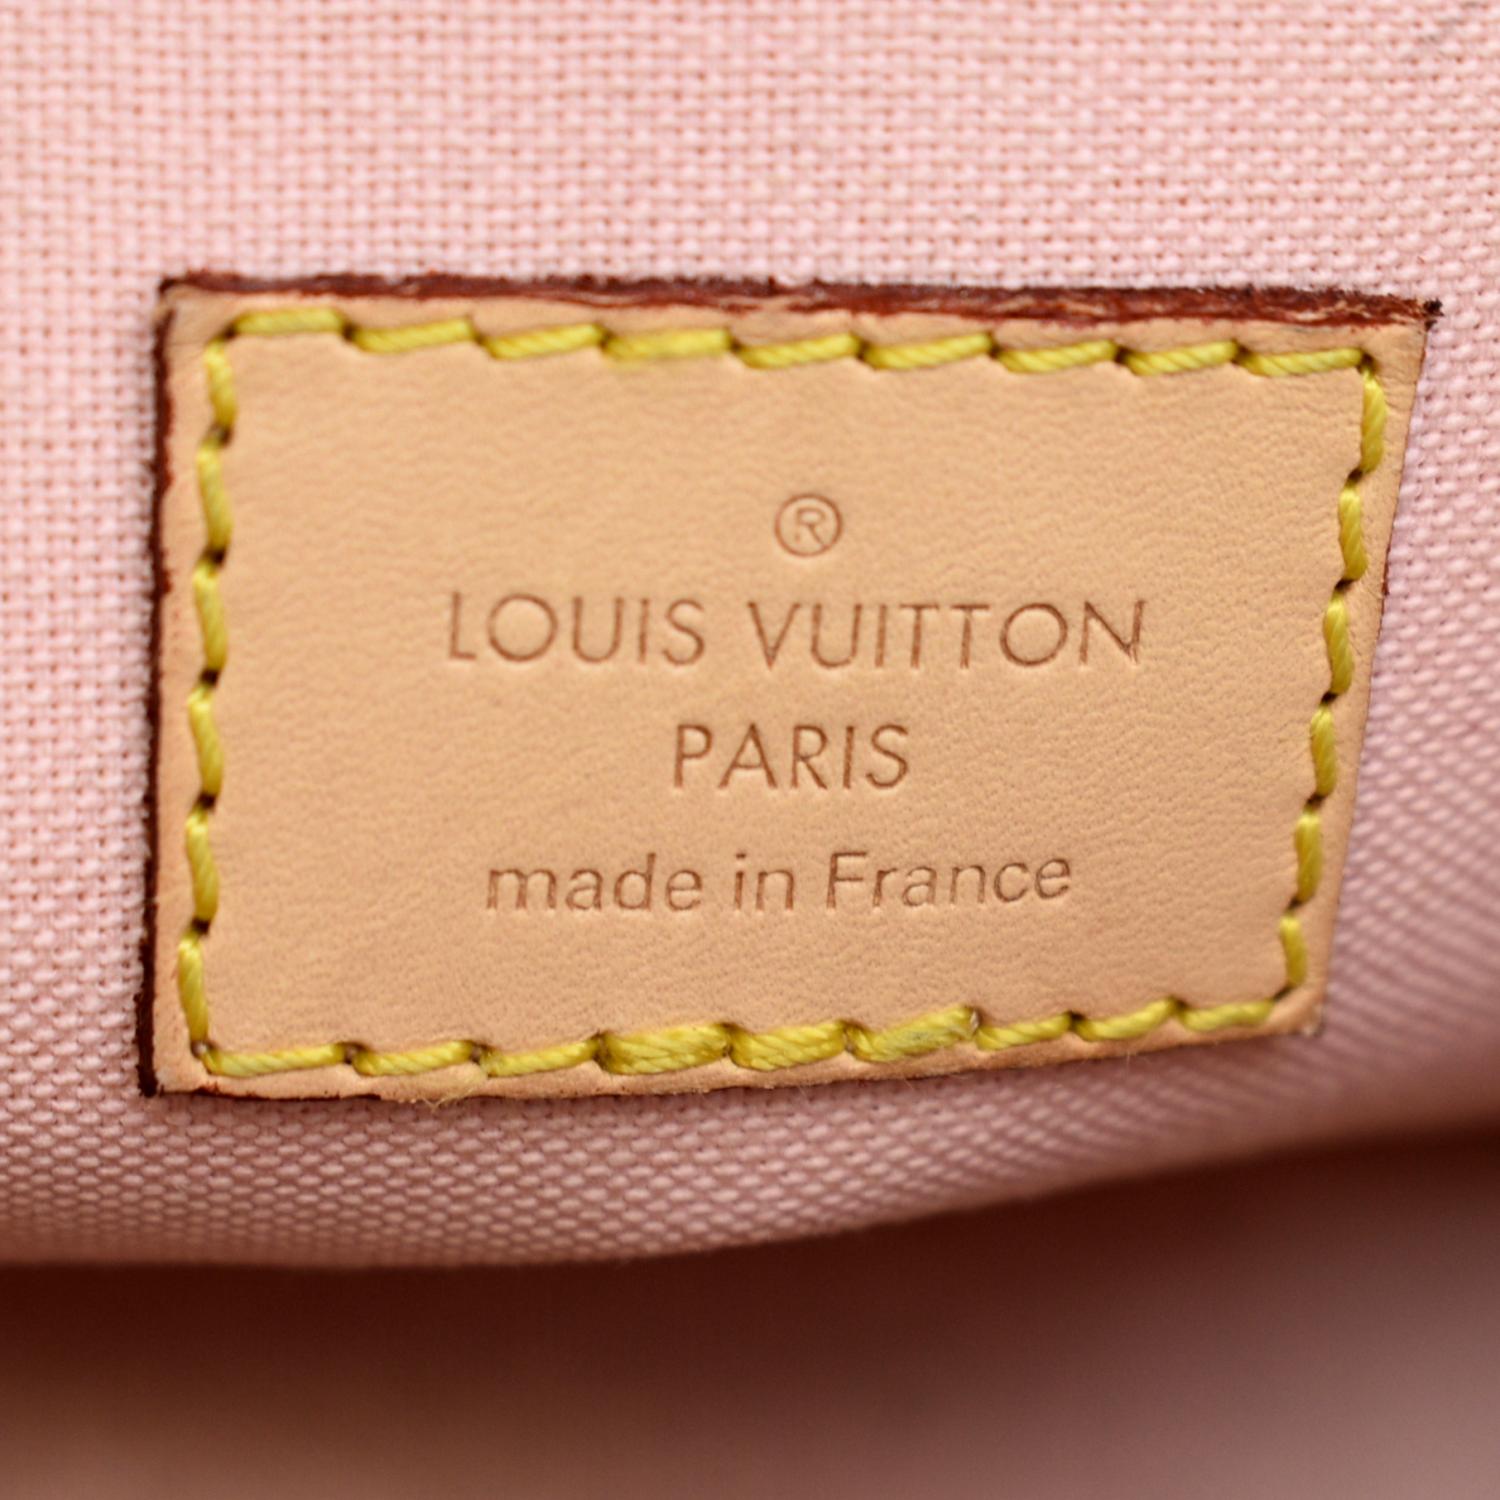 shareviewsbags Louis Vuitton Croisette Damier Azure . I